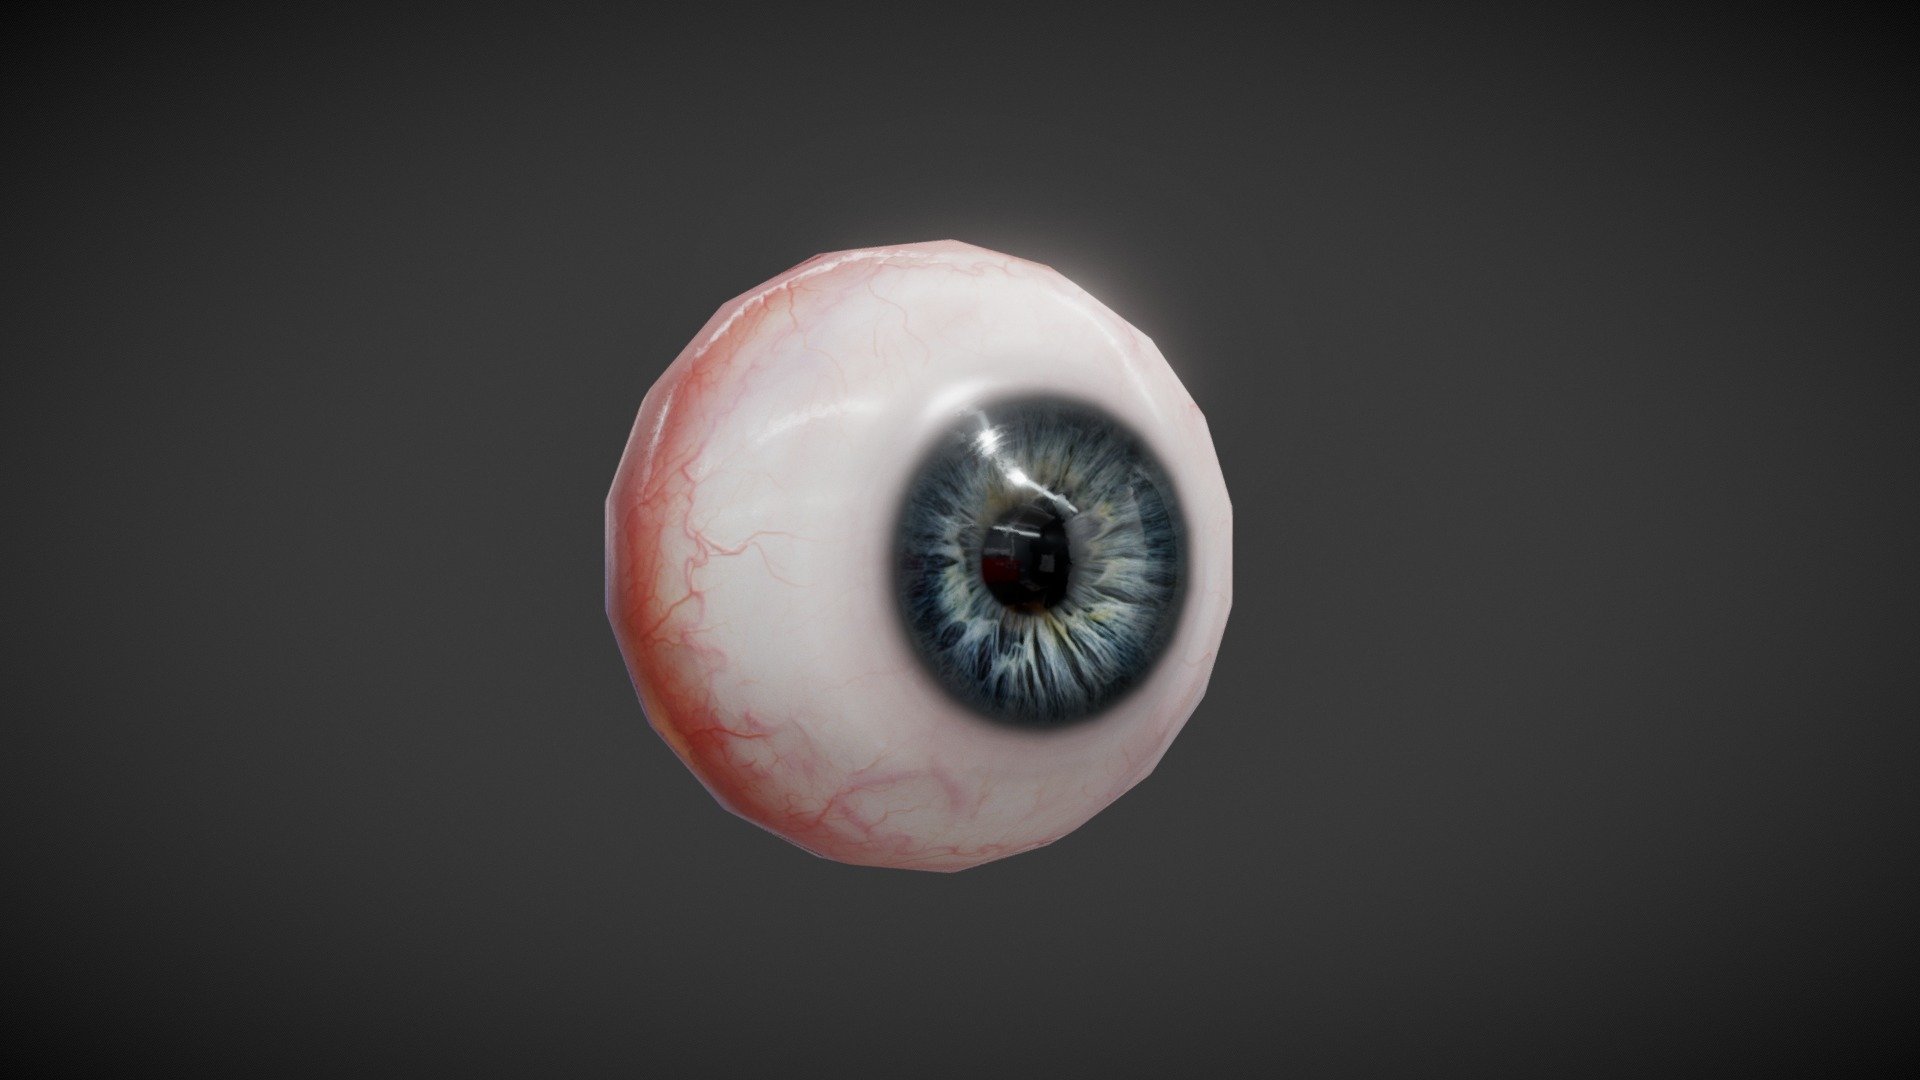 Realistic Human Eye (Low Poly) (2019) - 3D model by Jim Morren (@journeyman) 3d model